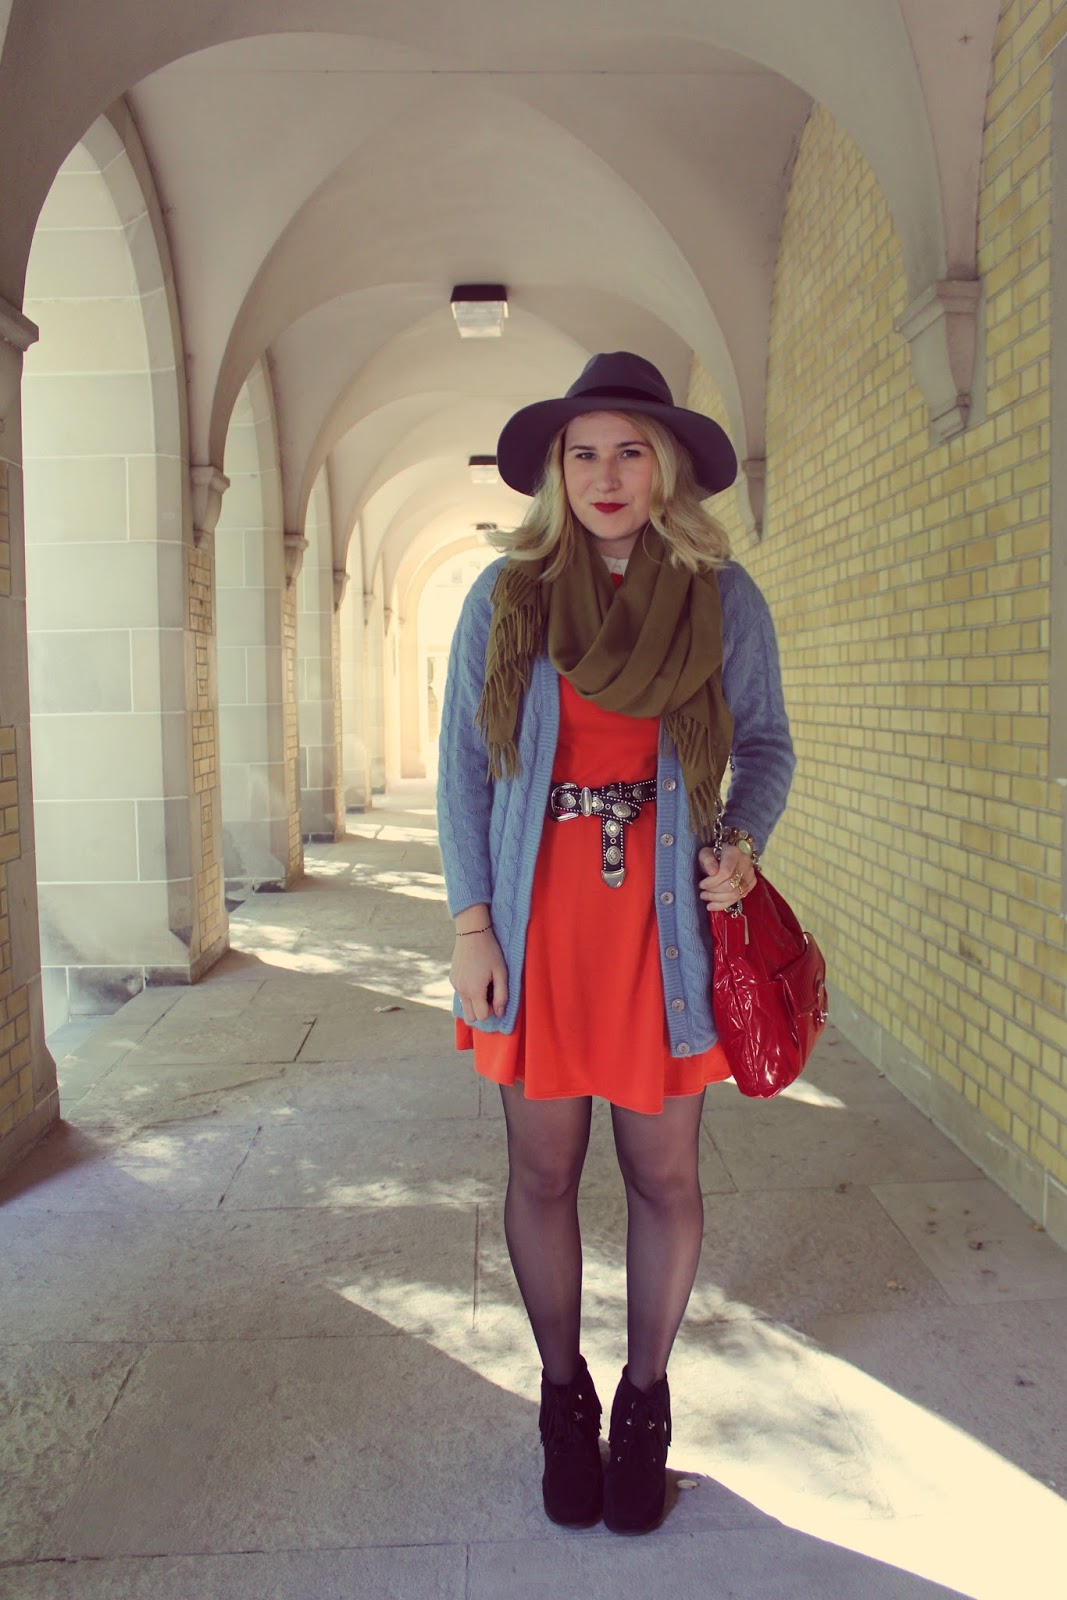 Blogger Interview mademoiselleruta - Fashionmylegs : The tights and